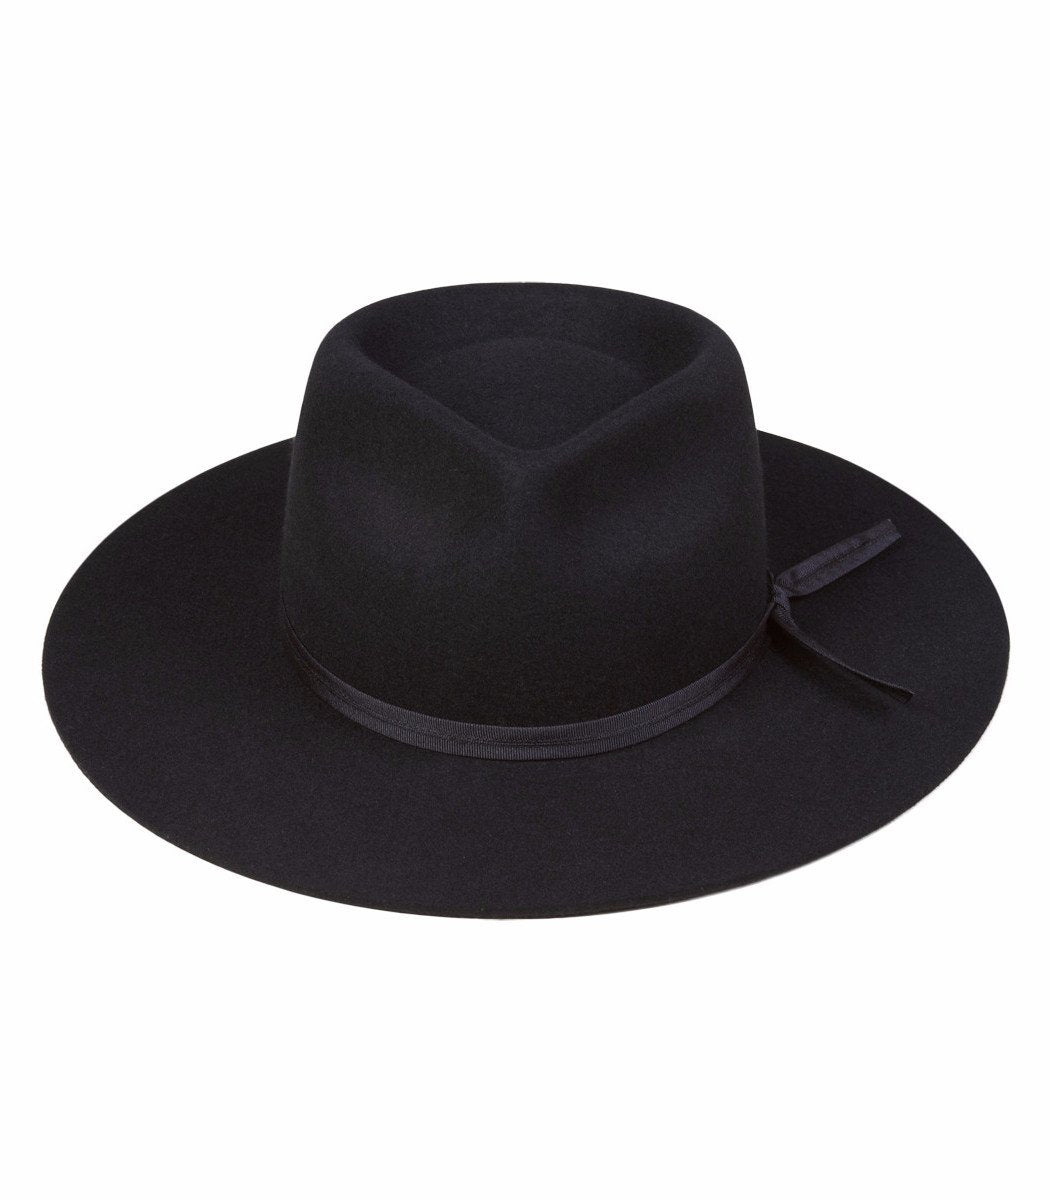 The Jethro Hat